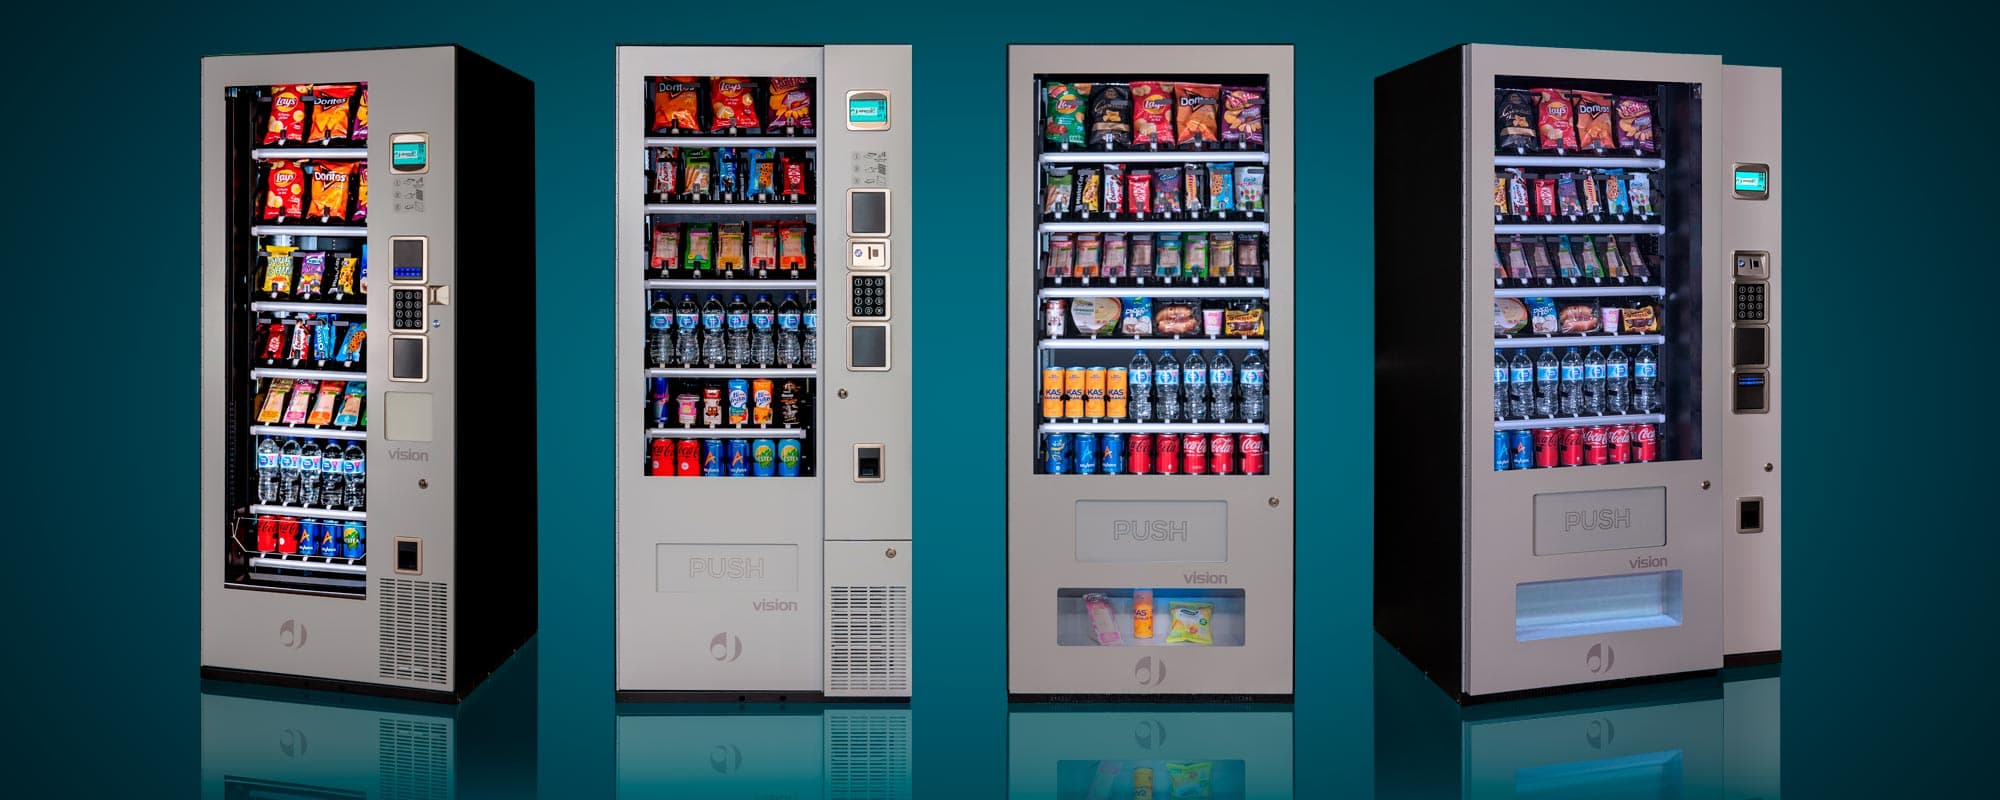 SNACK & FOOD Vision Vending Machines